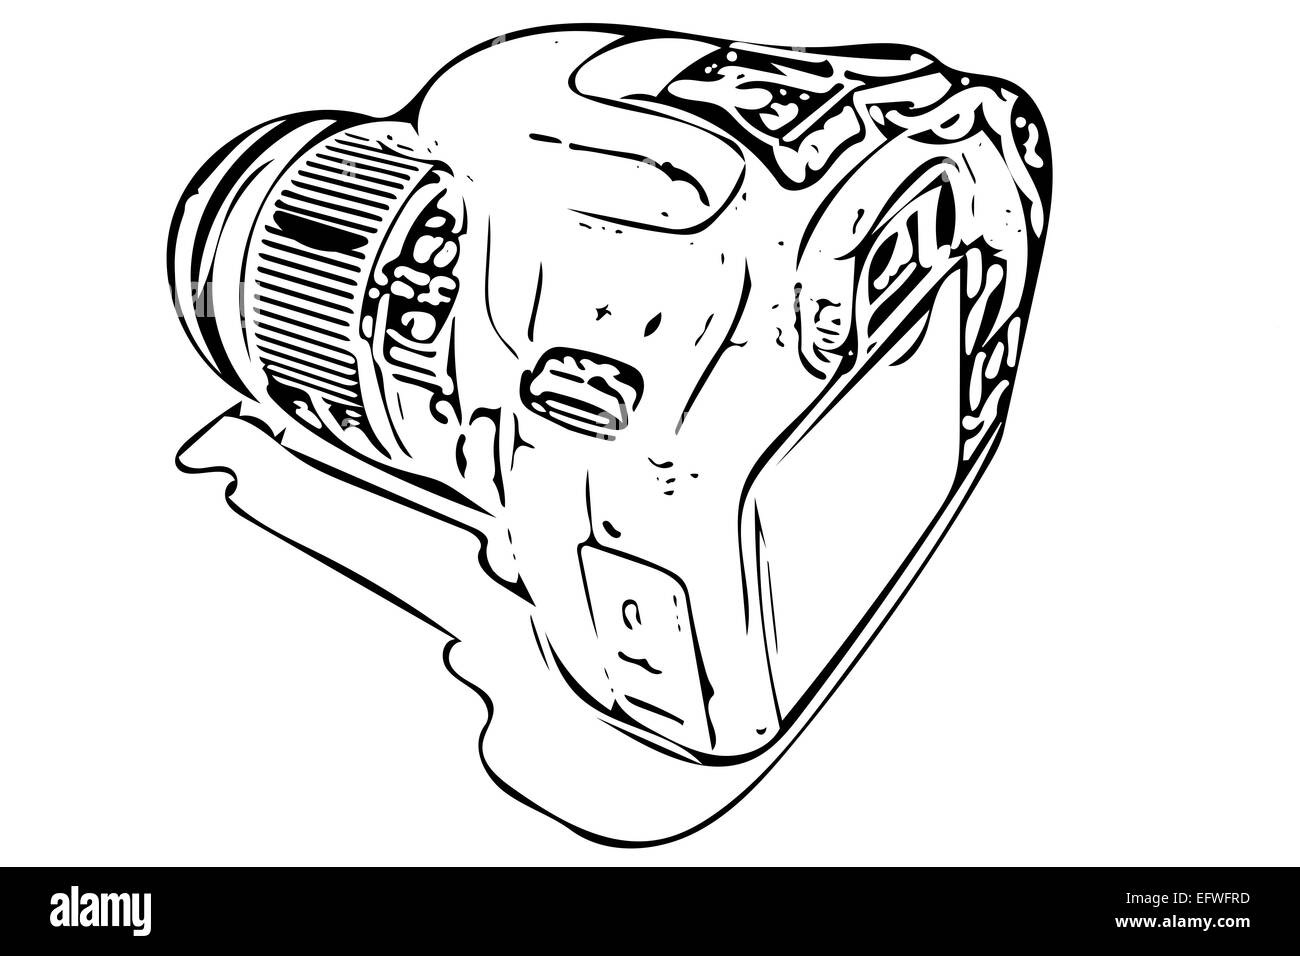 DSLR camera illustration Stock Photo